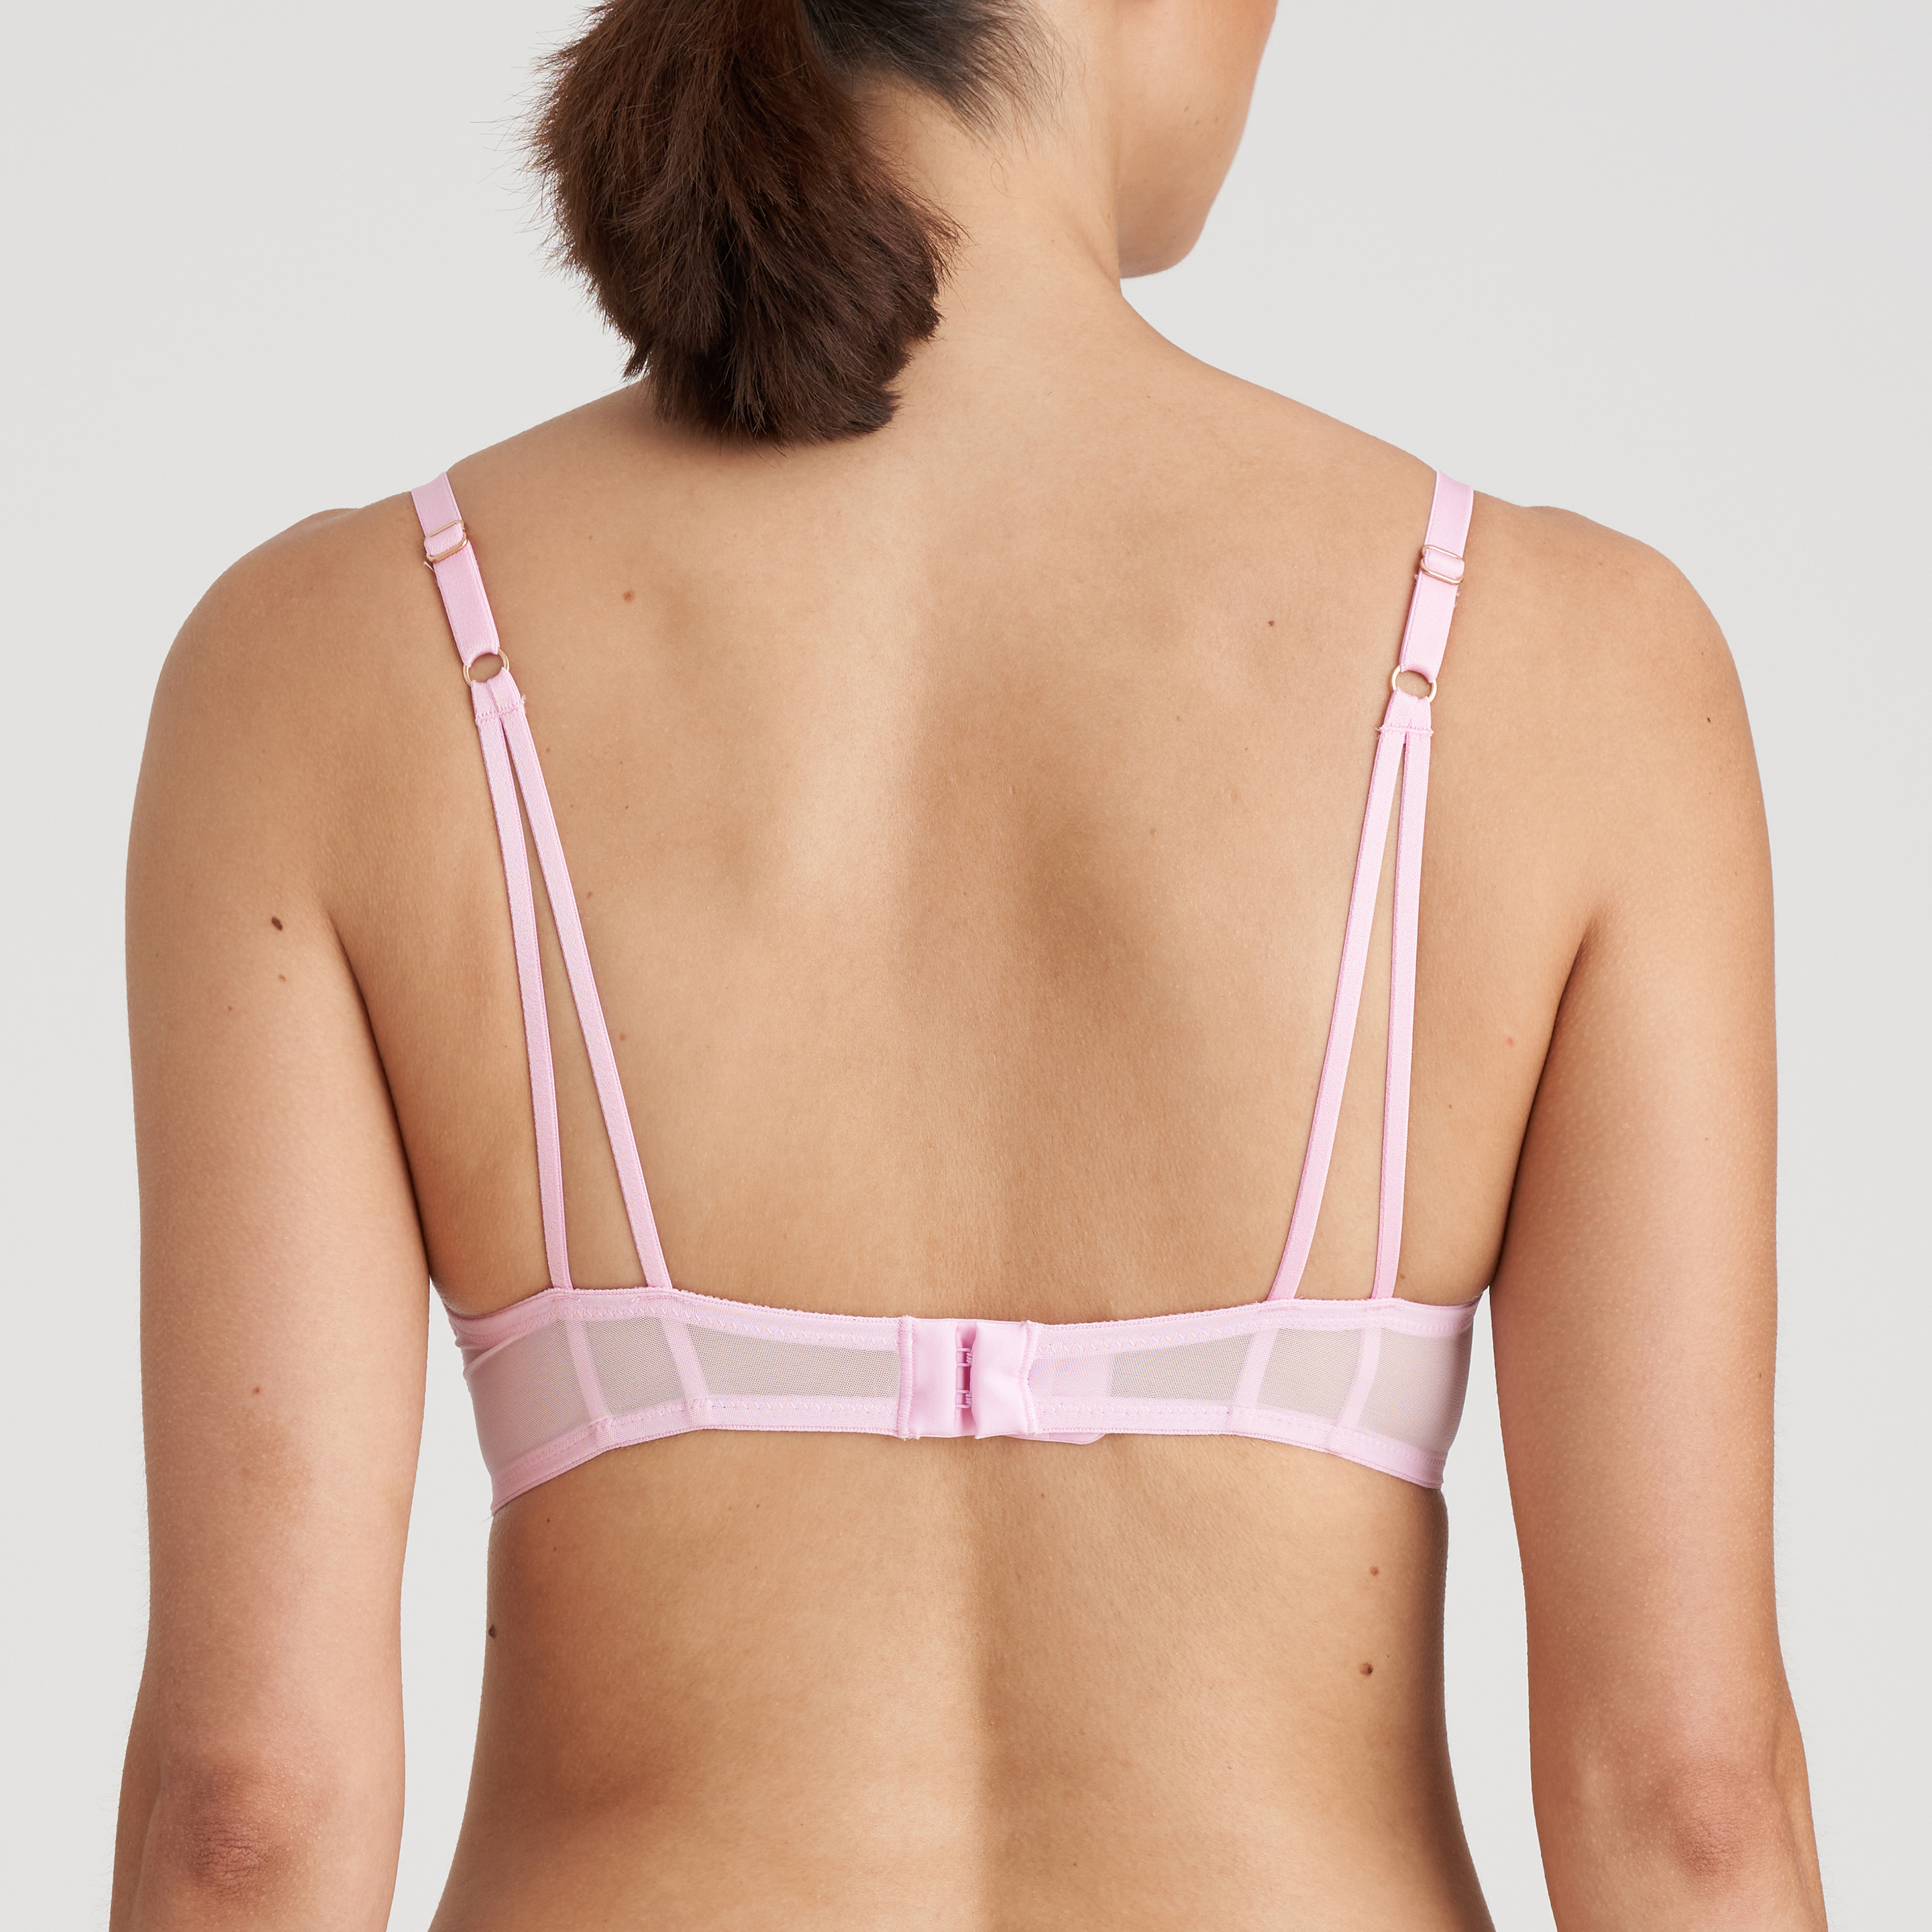 Marie Jo VITA Lily Rose push-up bra removable pads